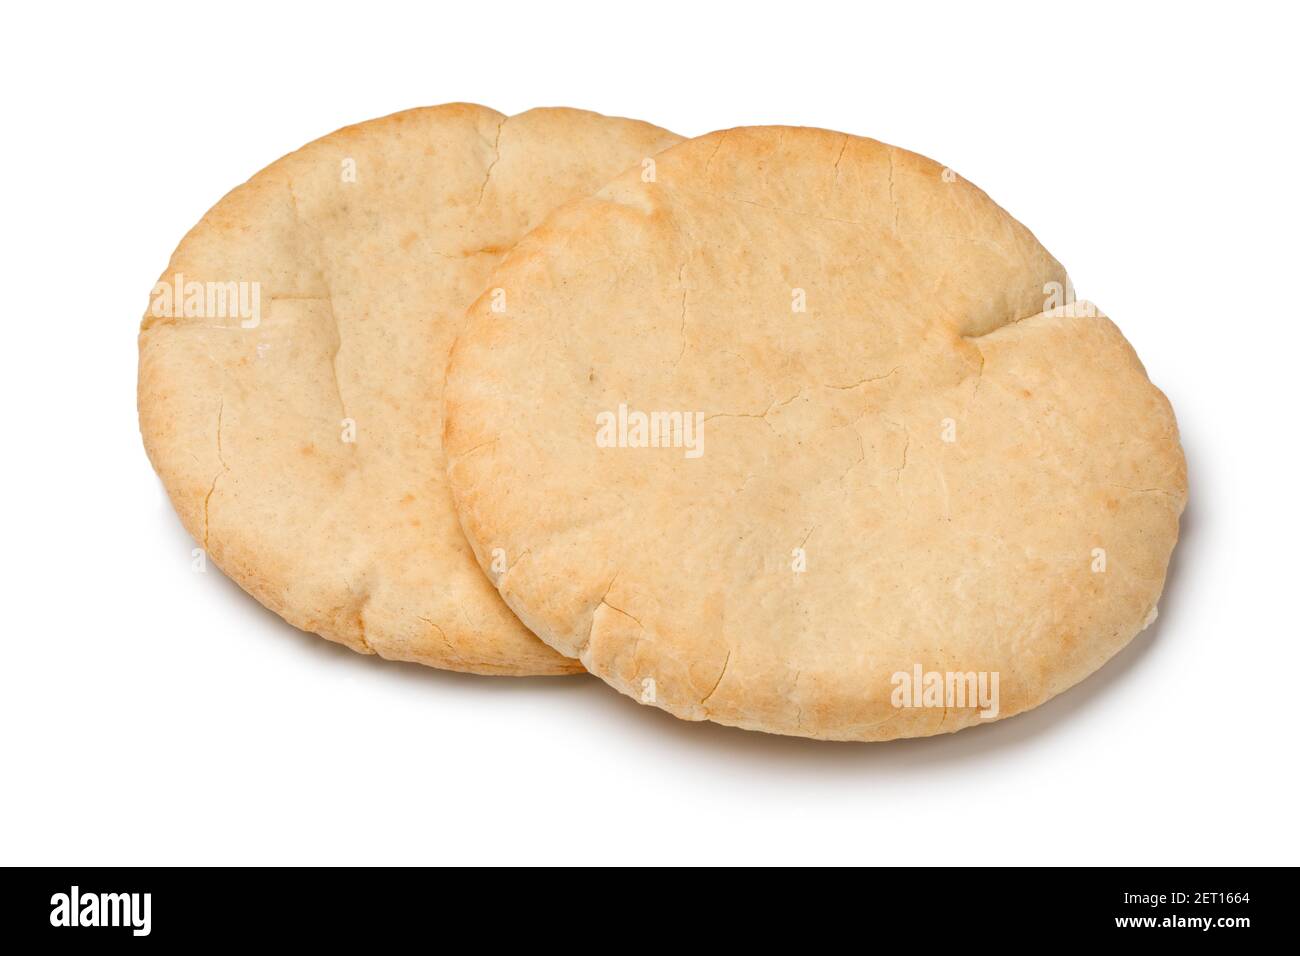 Pair of fresh baked pita bread isolated on white background Stock Photo